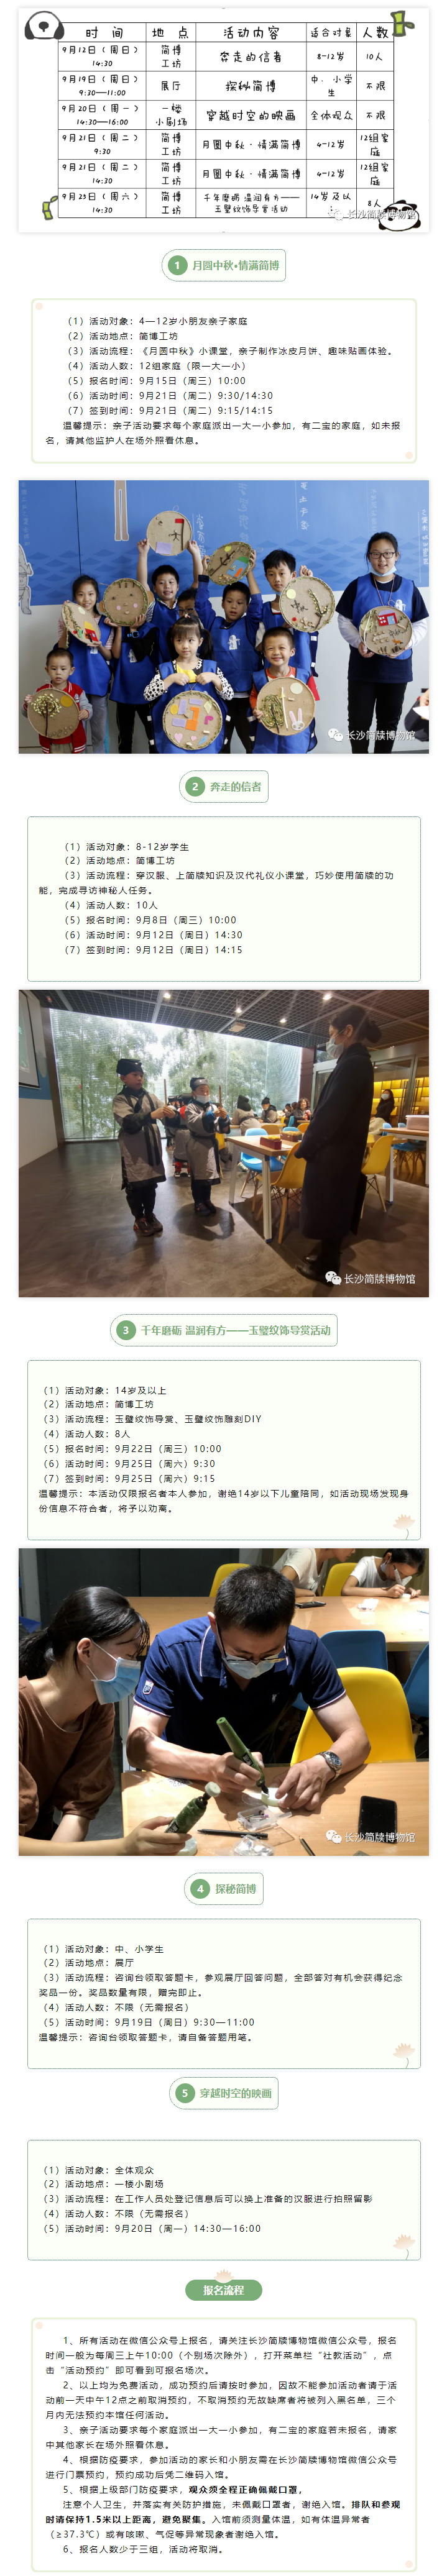 FireShot Capture 011 - 活动预告 - 长沙简牍博物馆2021年9月份社会教育活动时间表 - mp.weixin.jpg